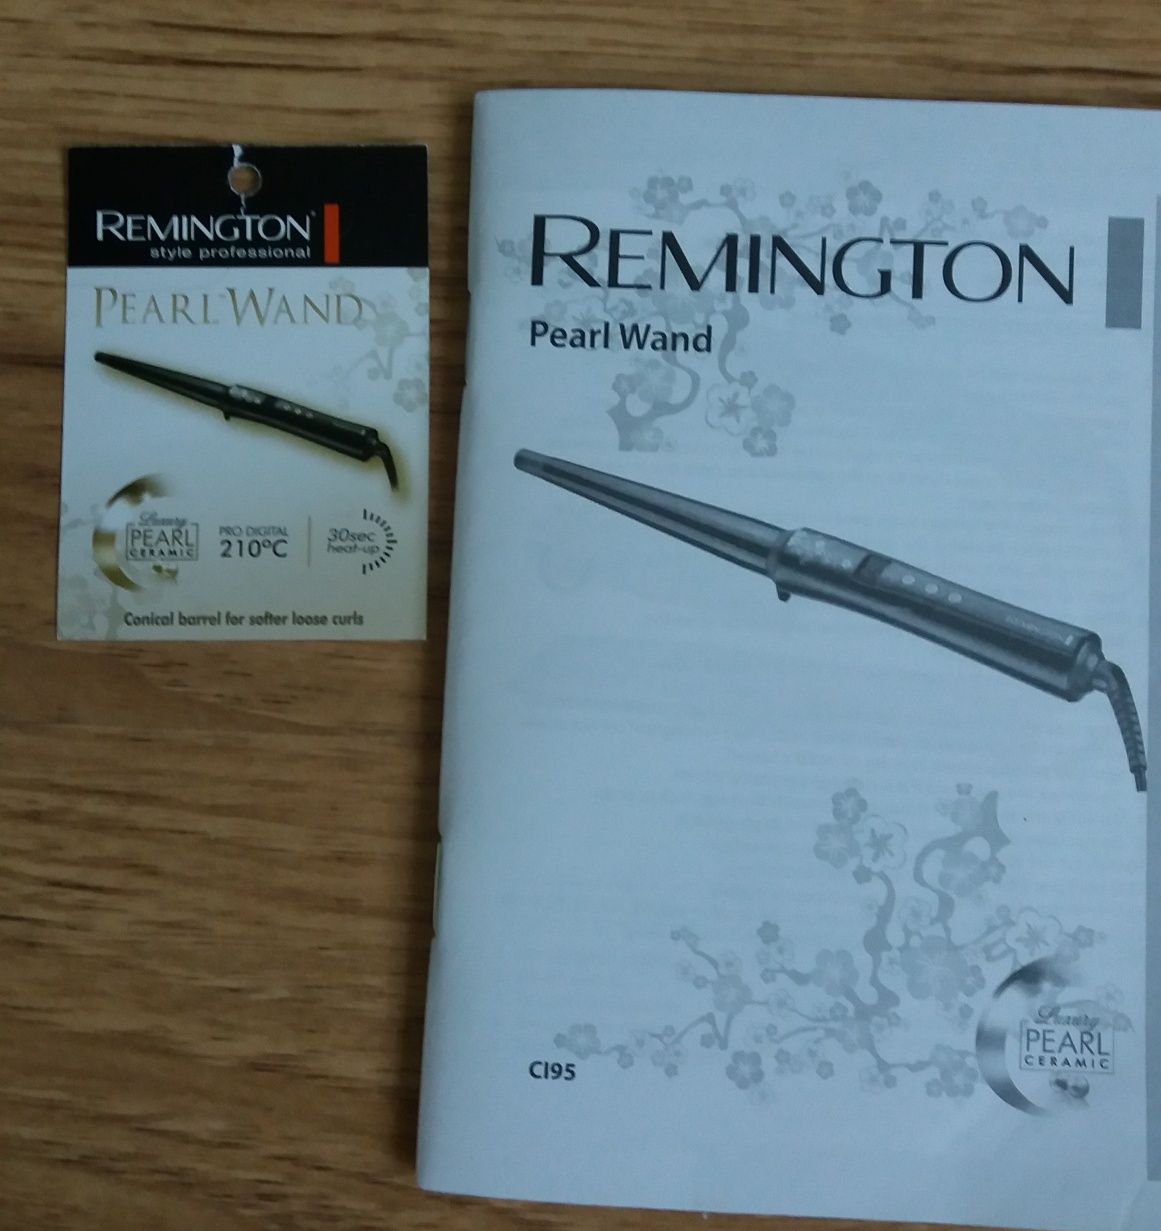 lokówka Remington Pearl Wand Ci95